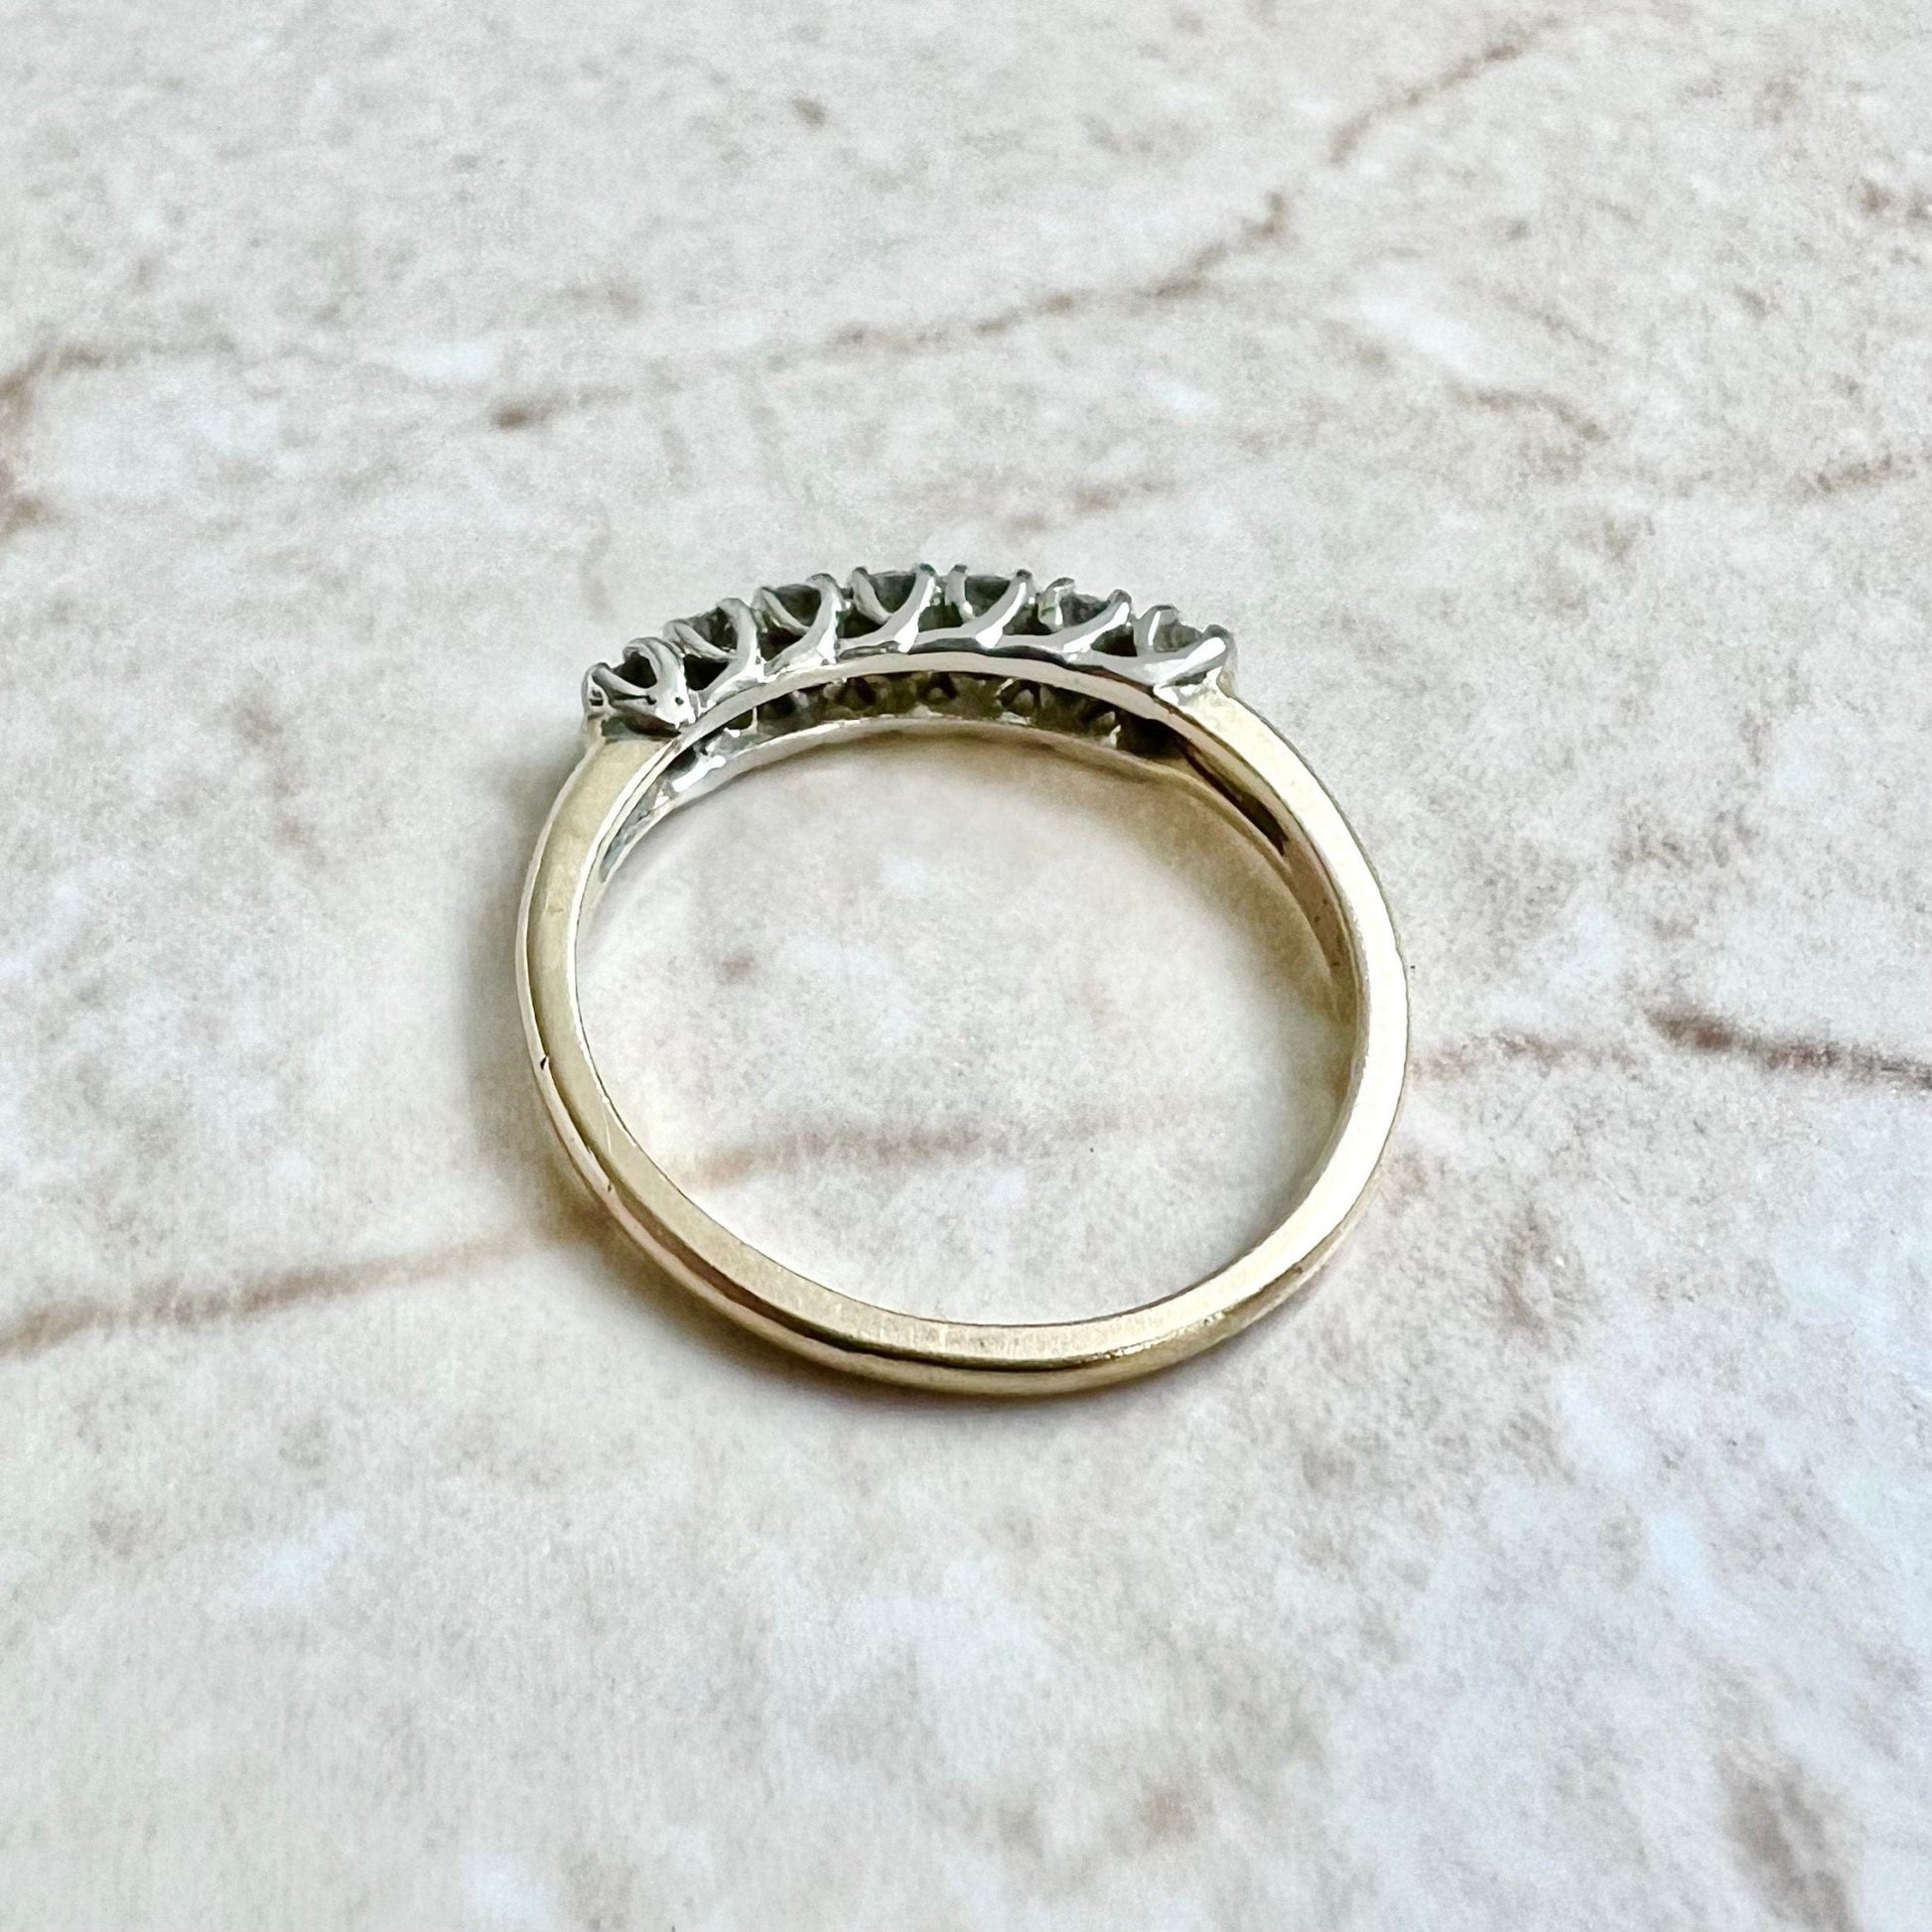 Vintage 14K 7 Stone Diamond Band Ring 0.30 CTTW - Two Tone Gold Diamond Ring - Seven Stone Ring - Anniversary Ring - Diamond Wedding Ring